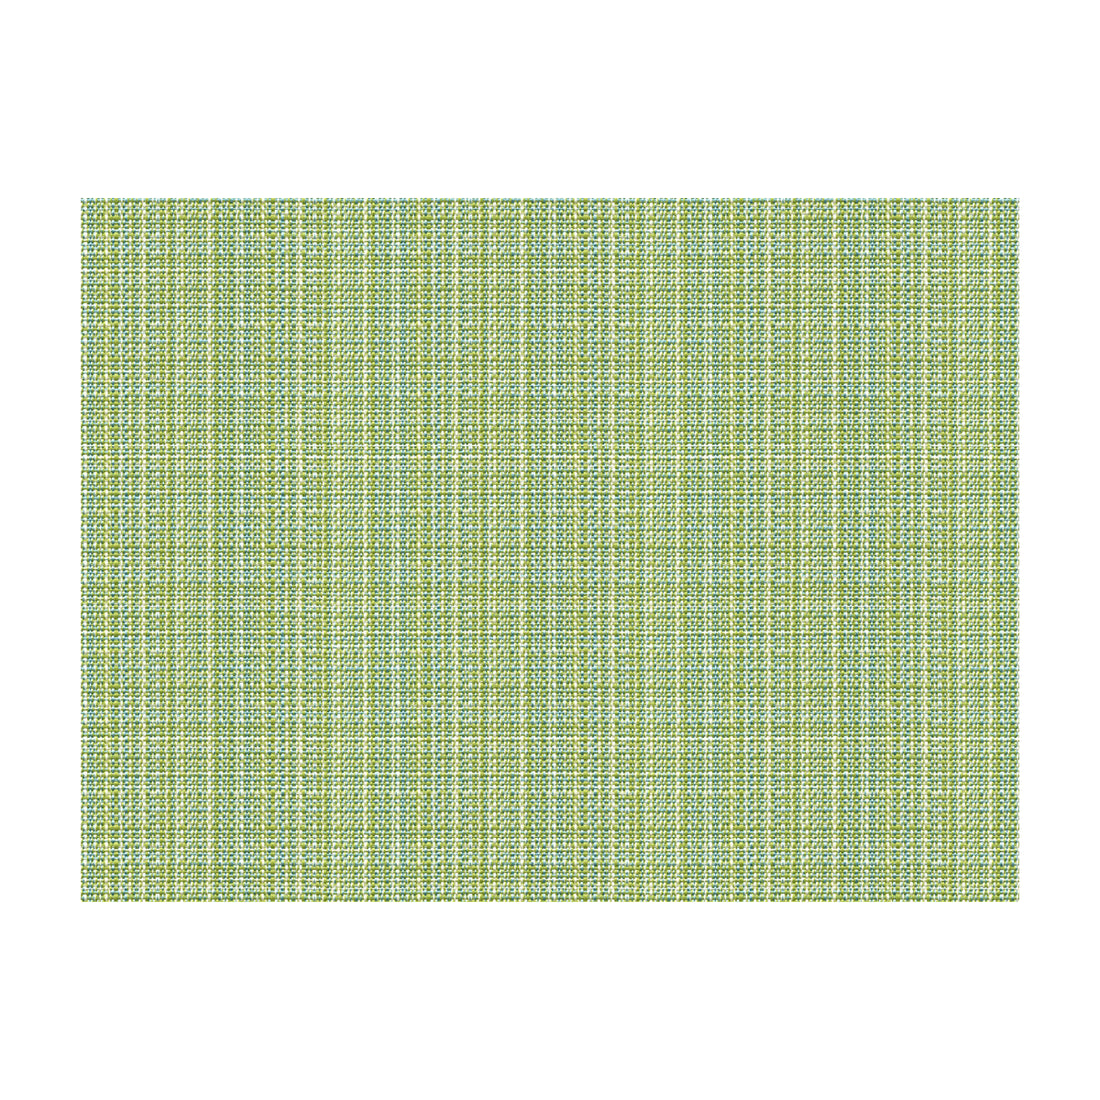 Kravet Smart fabric in 33340-315 color - pattern 33340.315.0 - by Kravet Smart in the Soleil collection